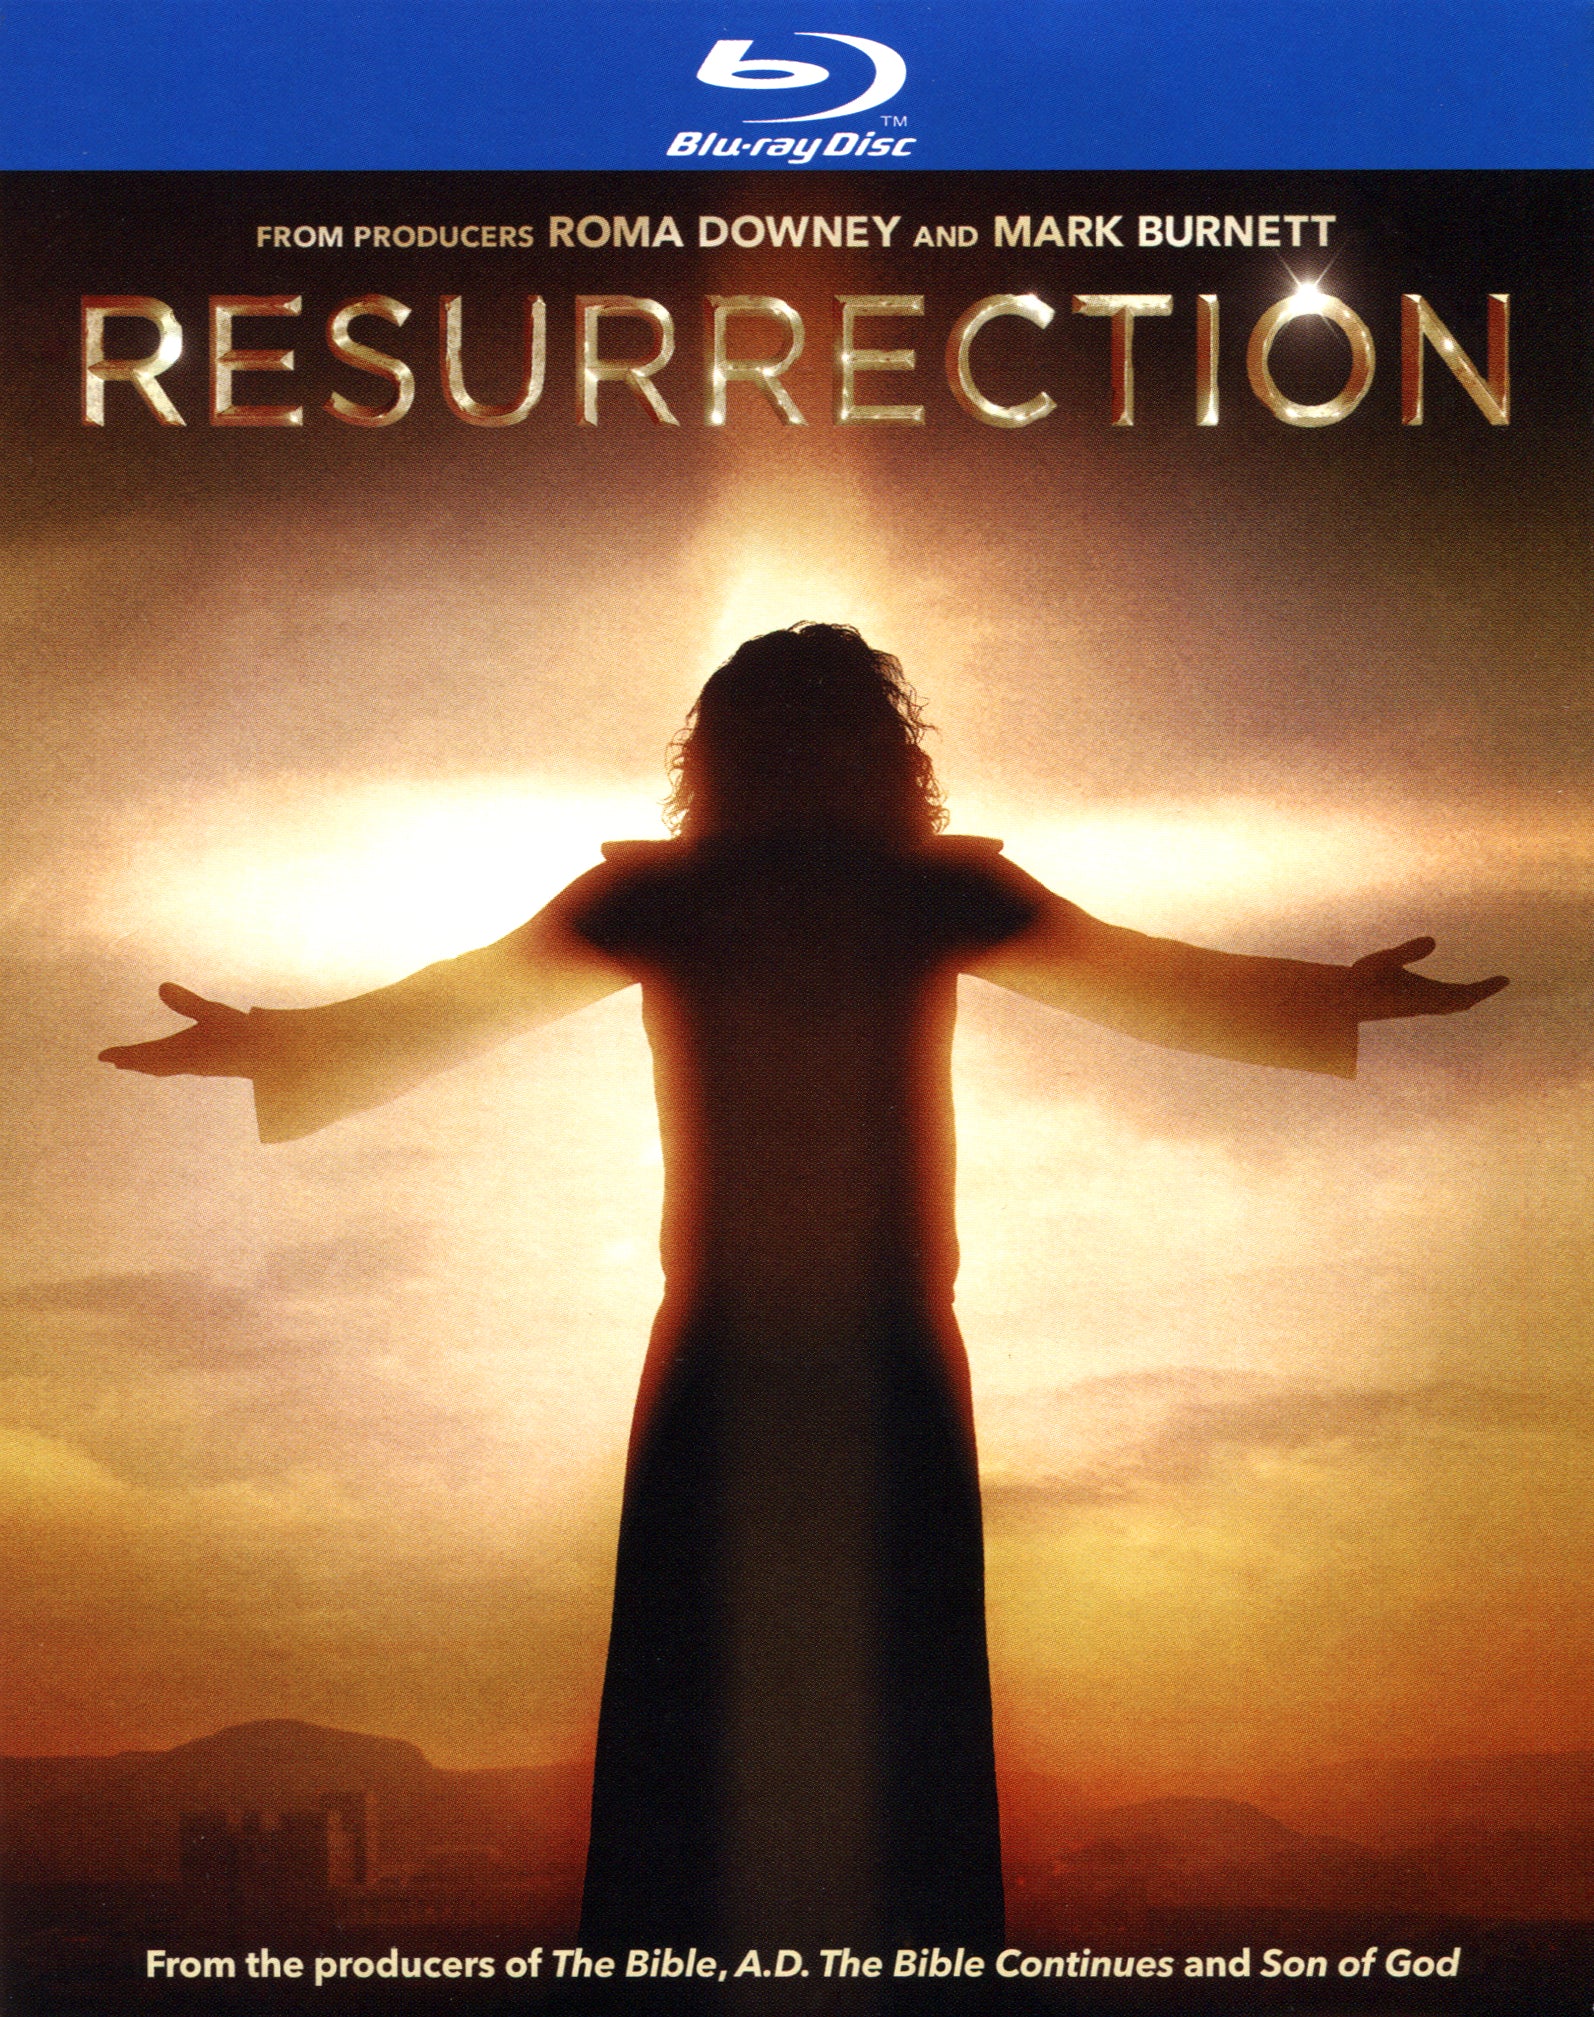 Resurrection [Blu-ray] cover art